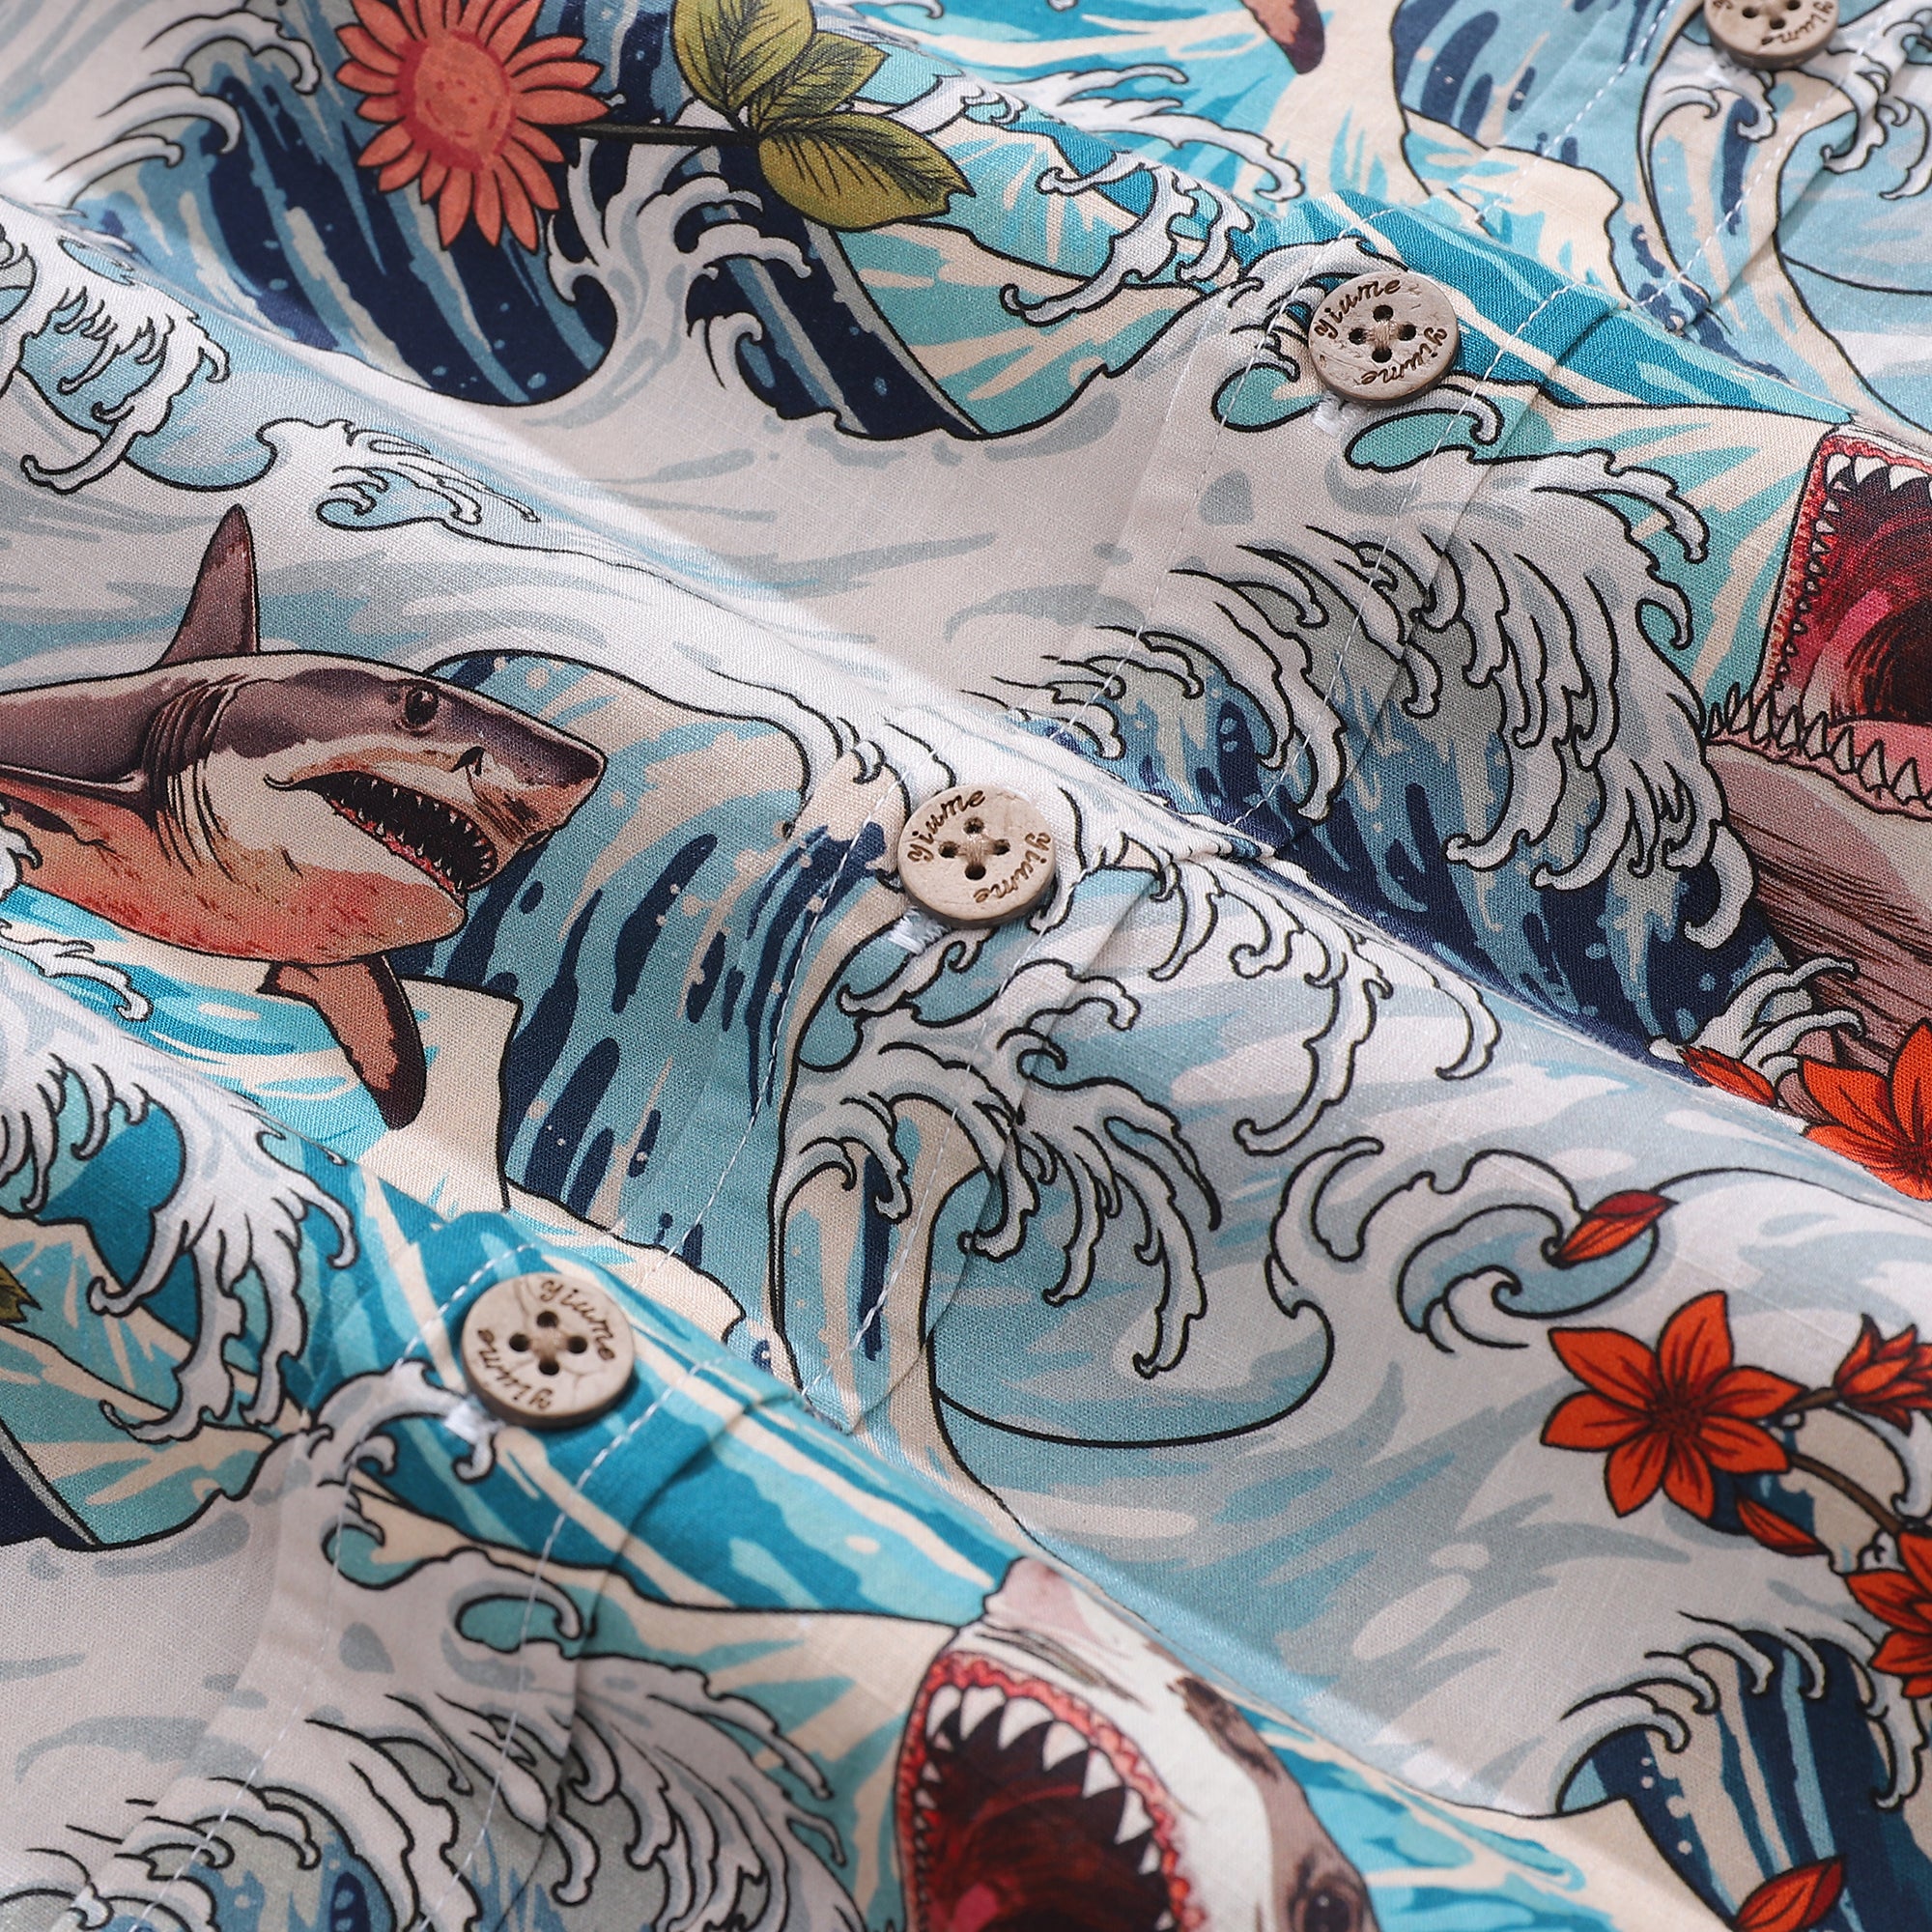 Men's Hawaiian Shirt Turbulence at Sea with Sharks Print Cotton Button-down Short Sleeve Aloha Shirt